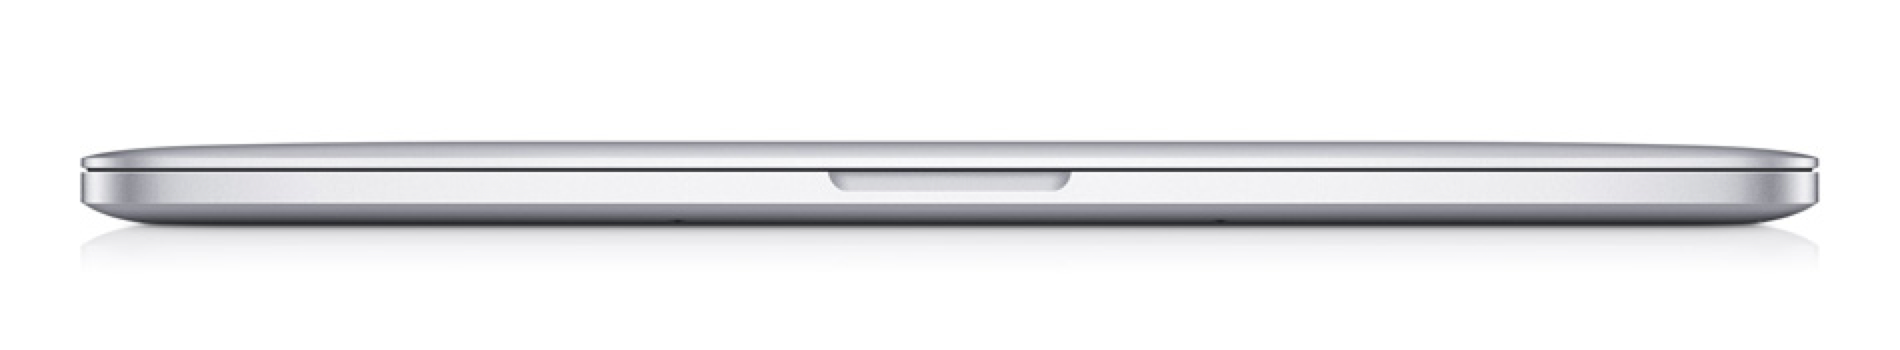 Macbook Pro Fechado - Apple Macbook Pro 15 com Tela Retina